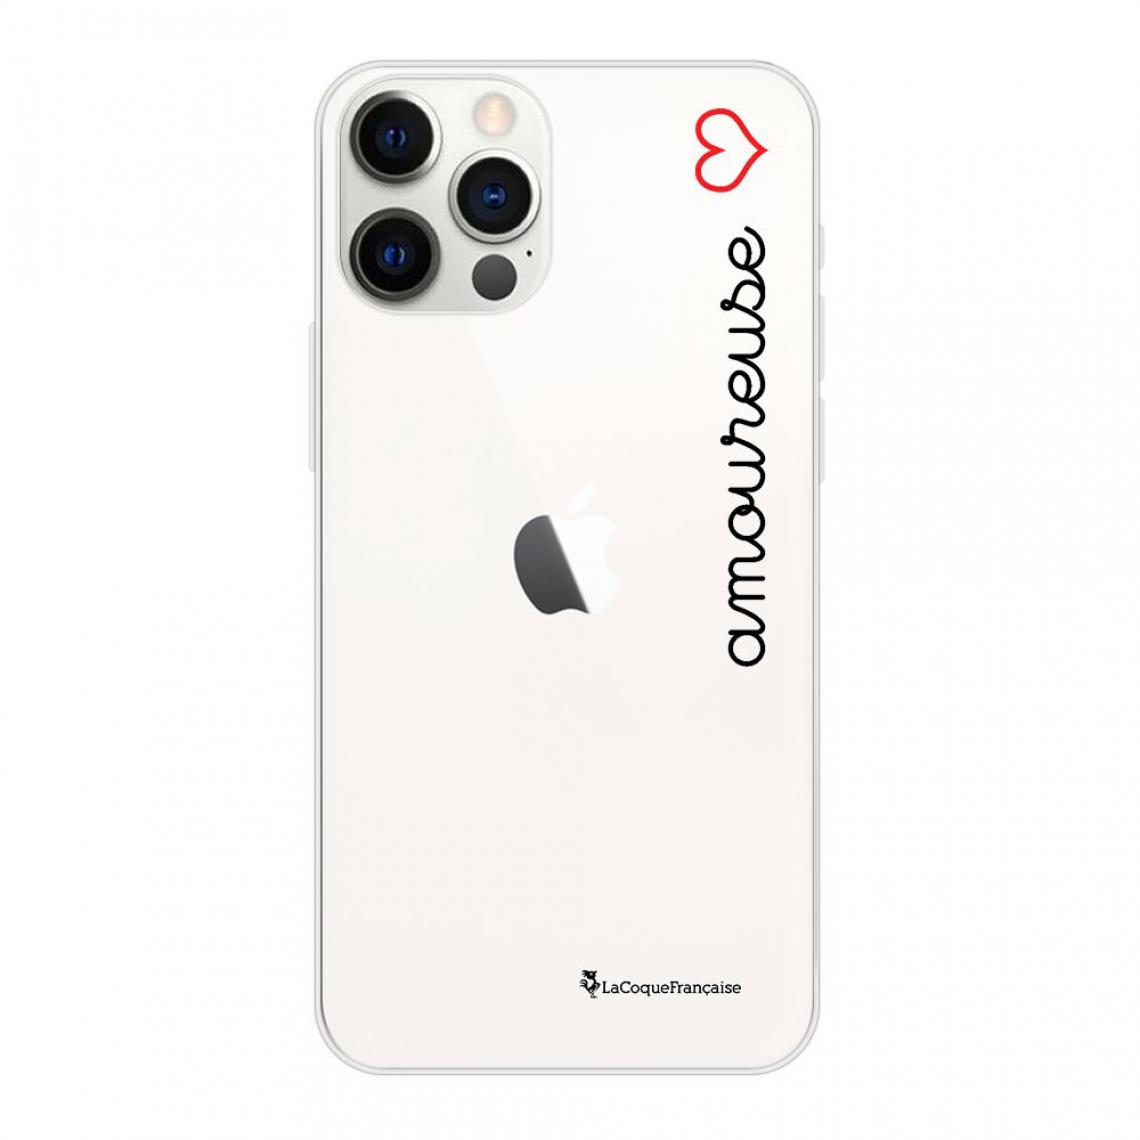 La Coque Francaise - Coque iPhone 12/12 Pro souple silicone transparente - Coque, étui smartphone